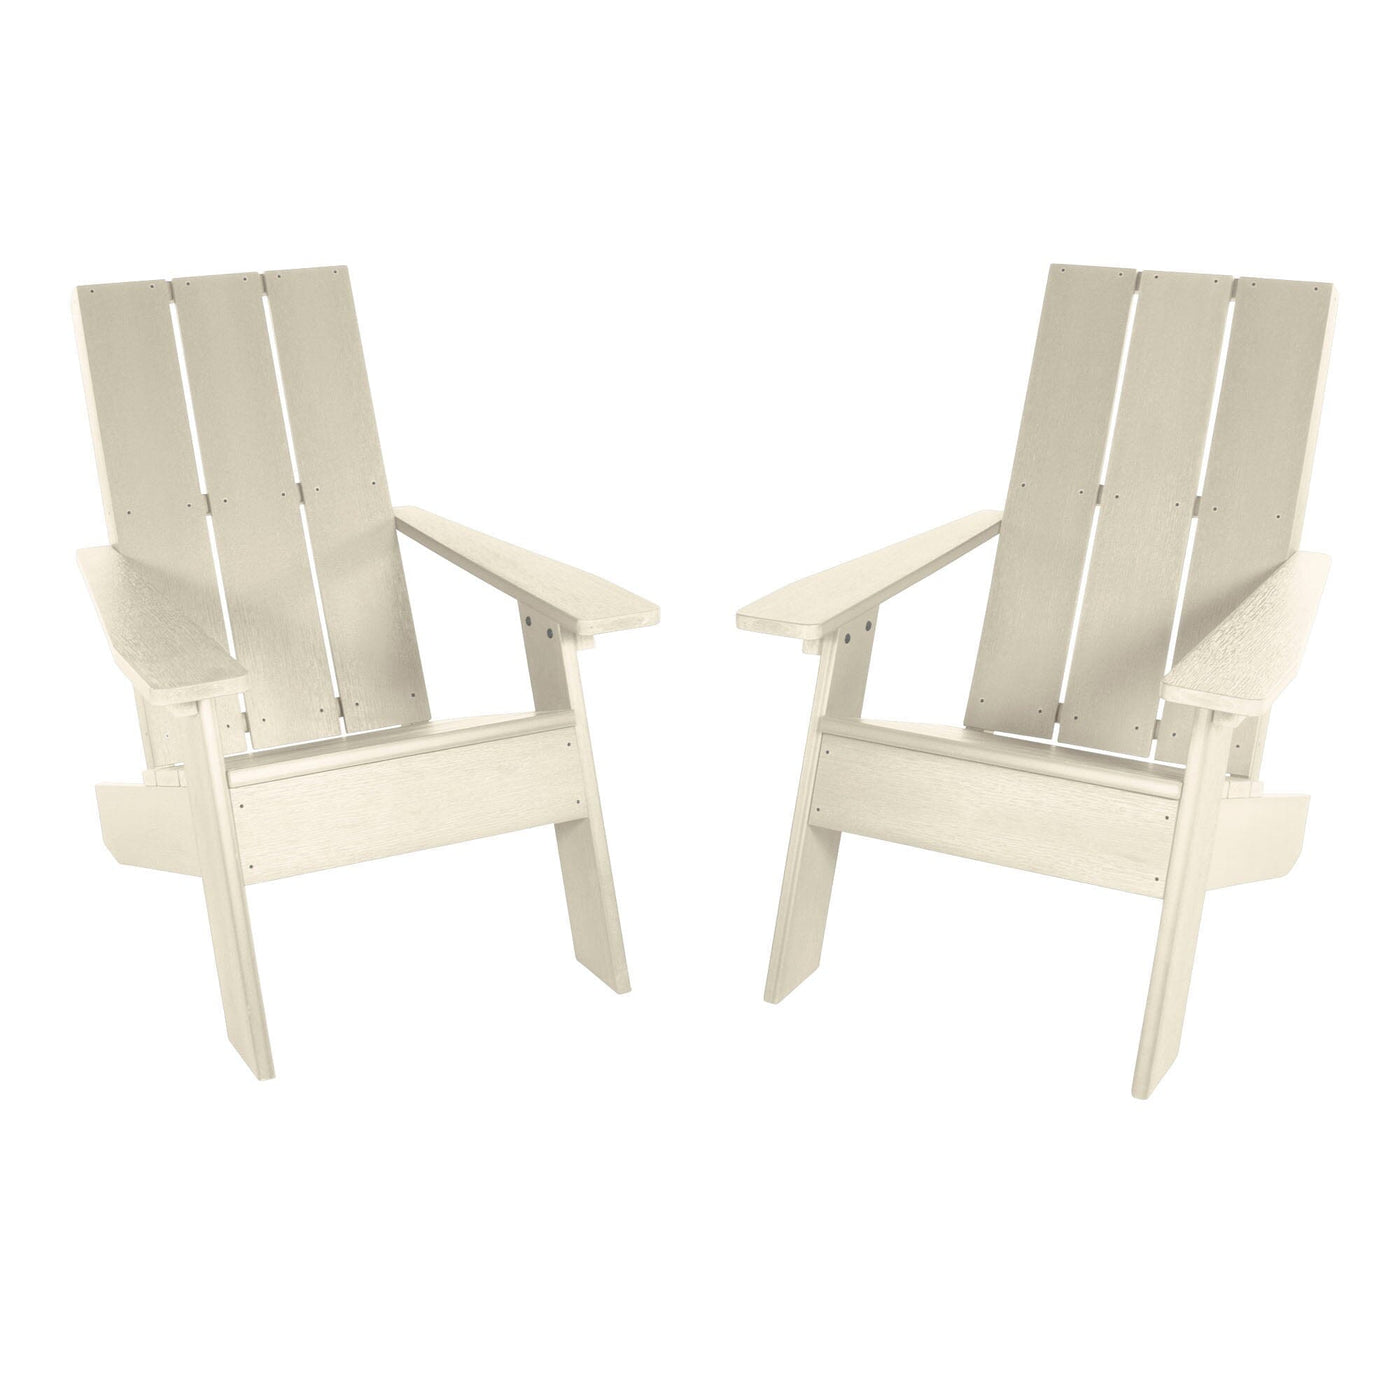 Set of Two Italica Modern Adirondack Chairs Adirondack Chairs Highwood USA Whitewash 